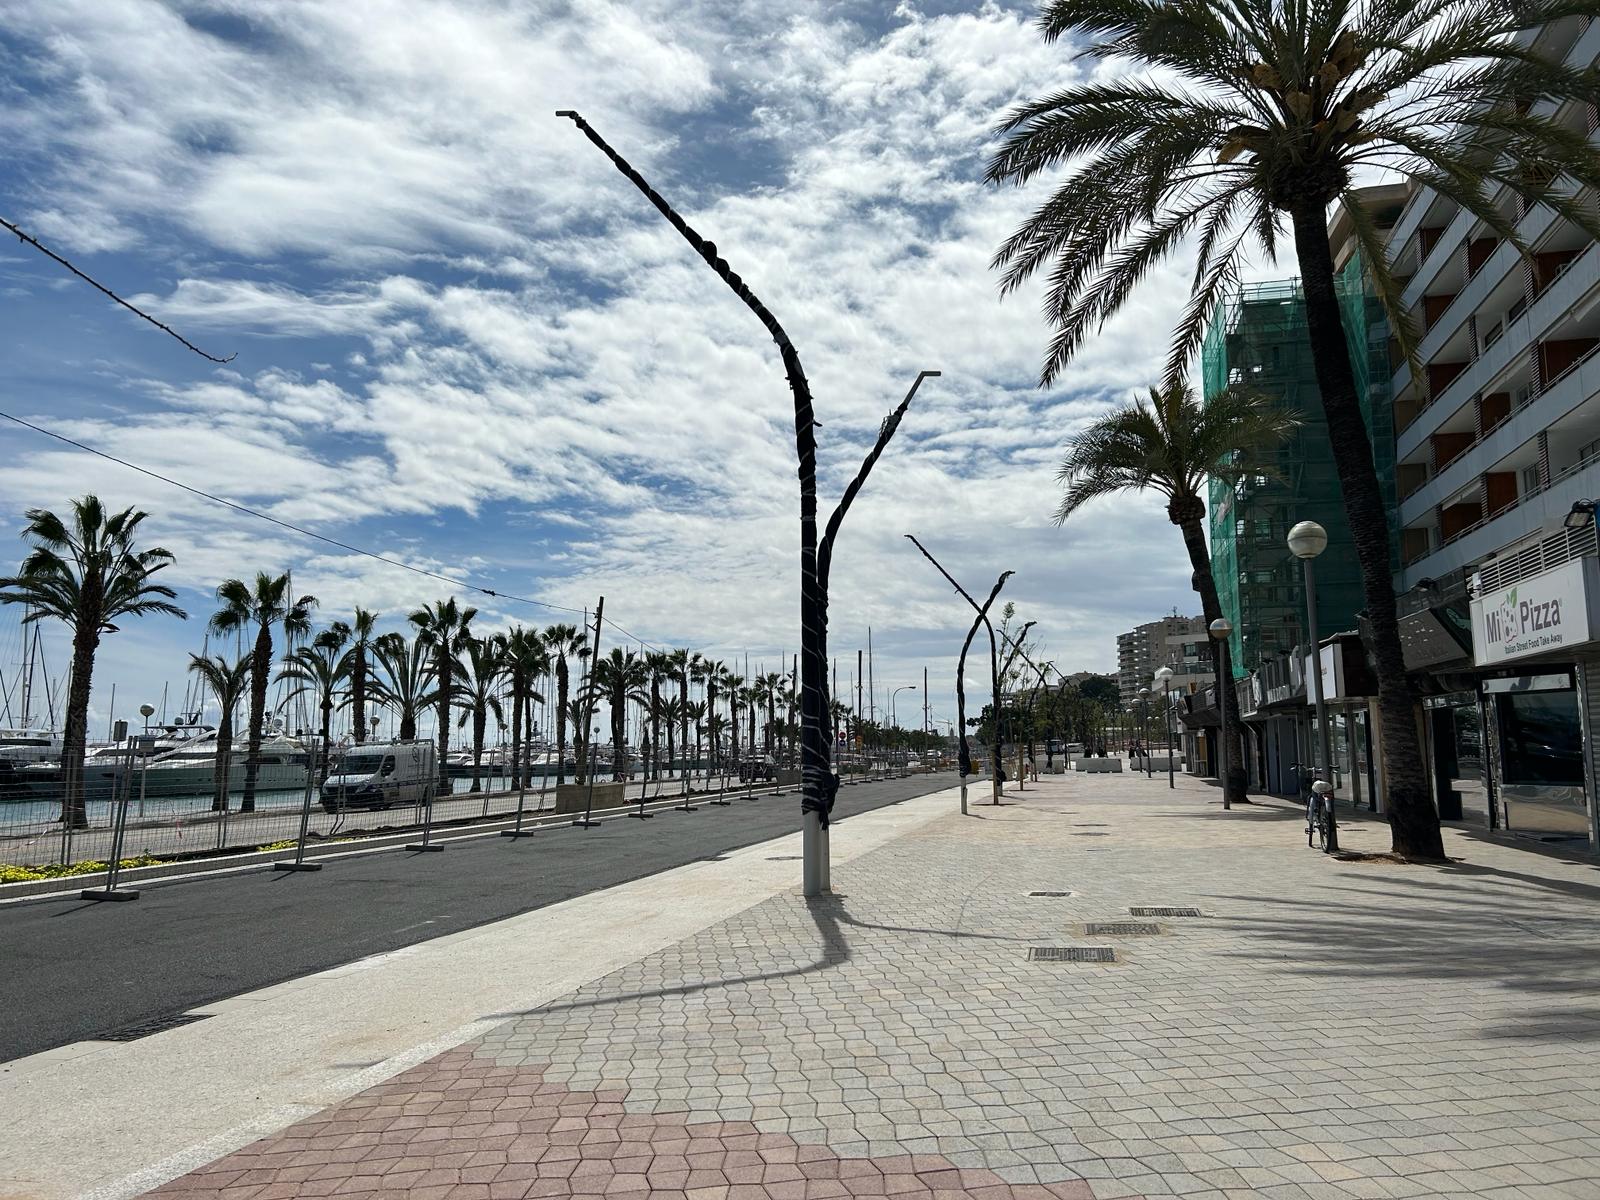 Two new lanes on Palma's Maritime Promenade towards Portopí open to traffic on 25 June